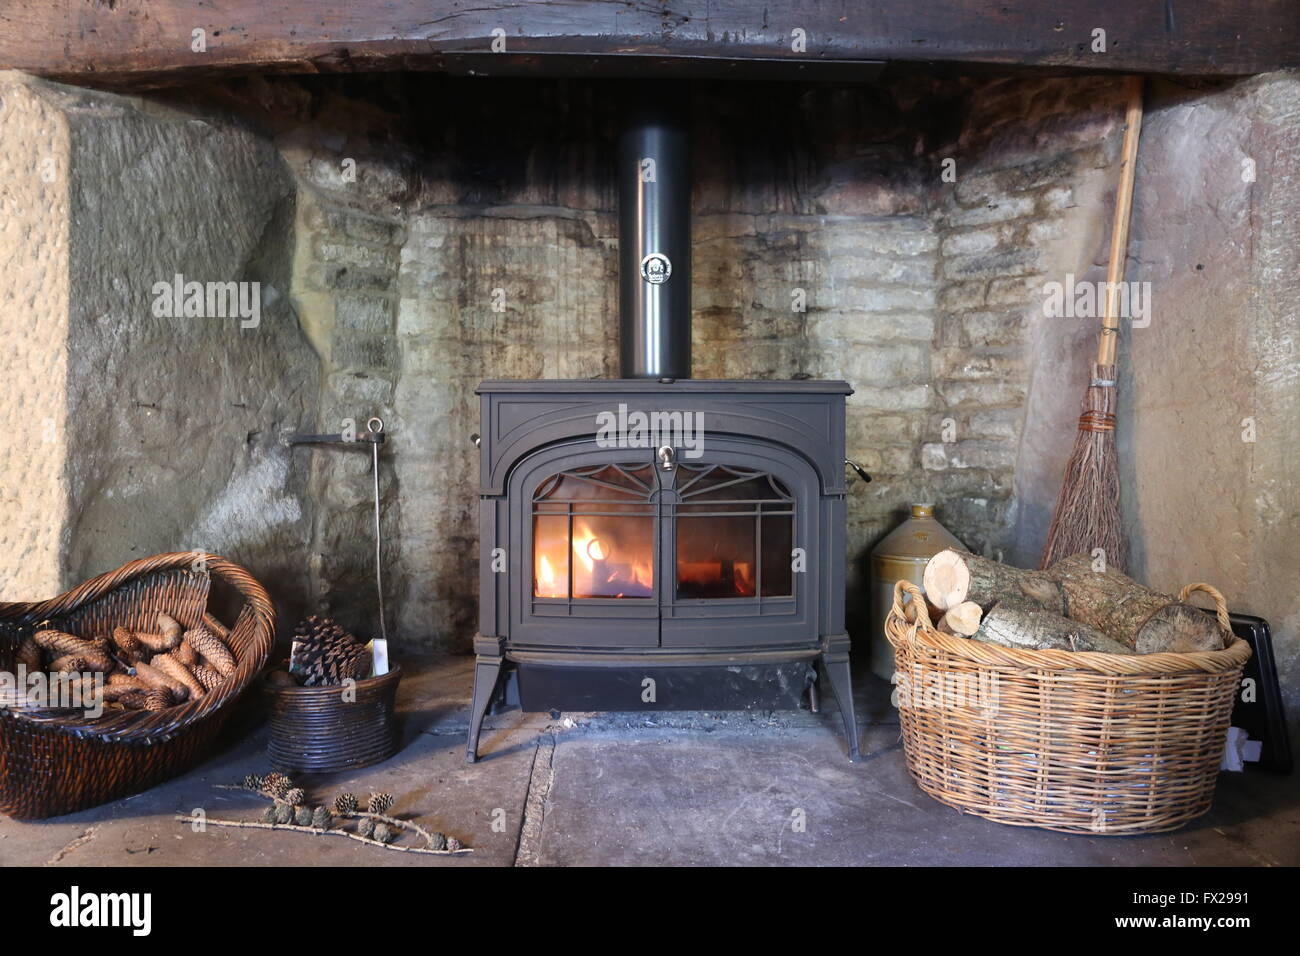 Holzbefeuerter Ofen im Inglenook Kamin Stockfotografie - Alamy